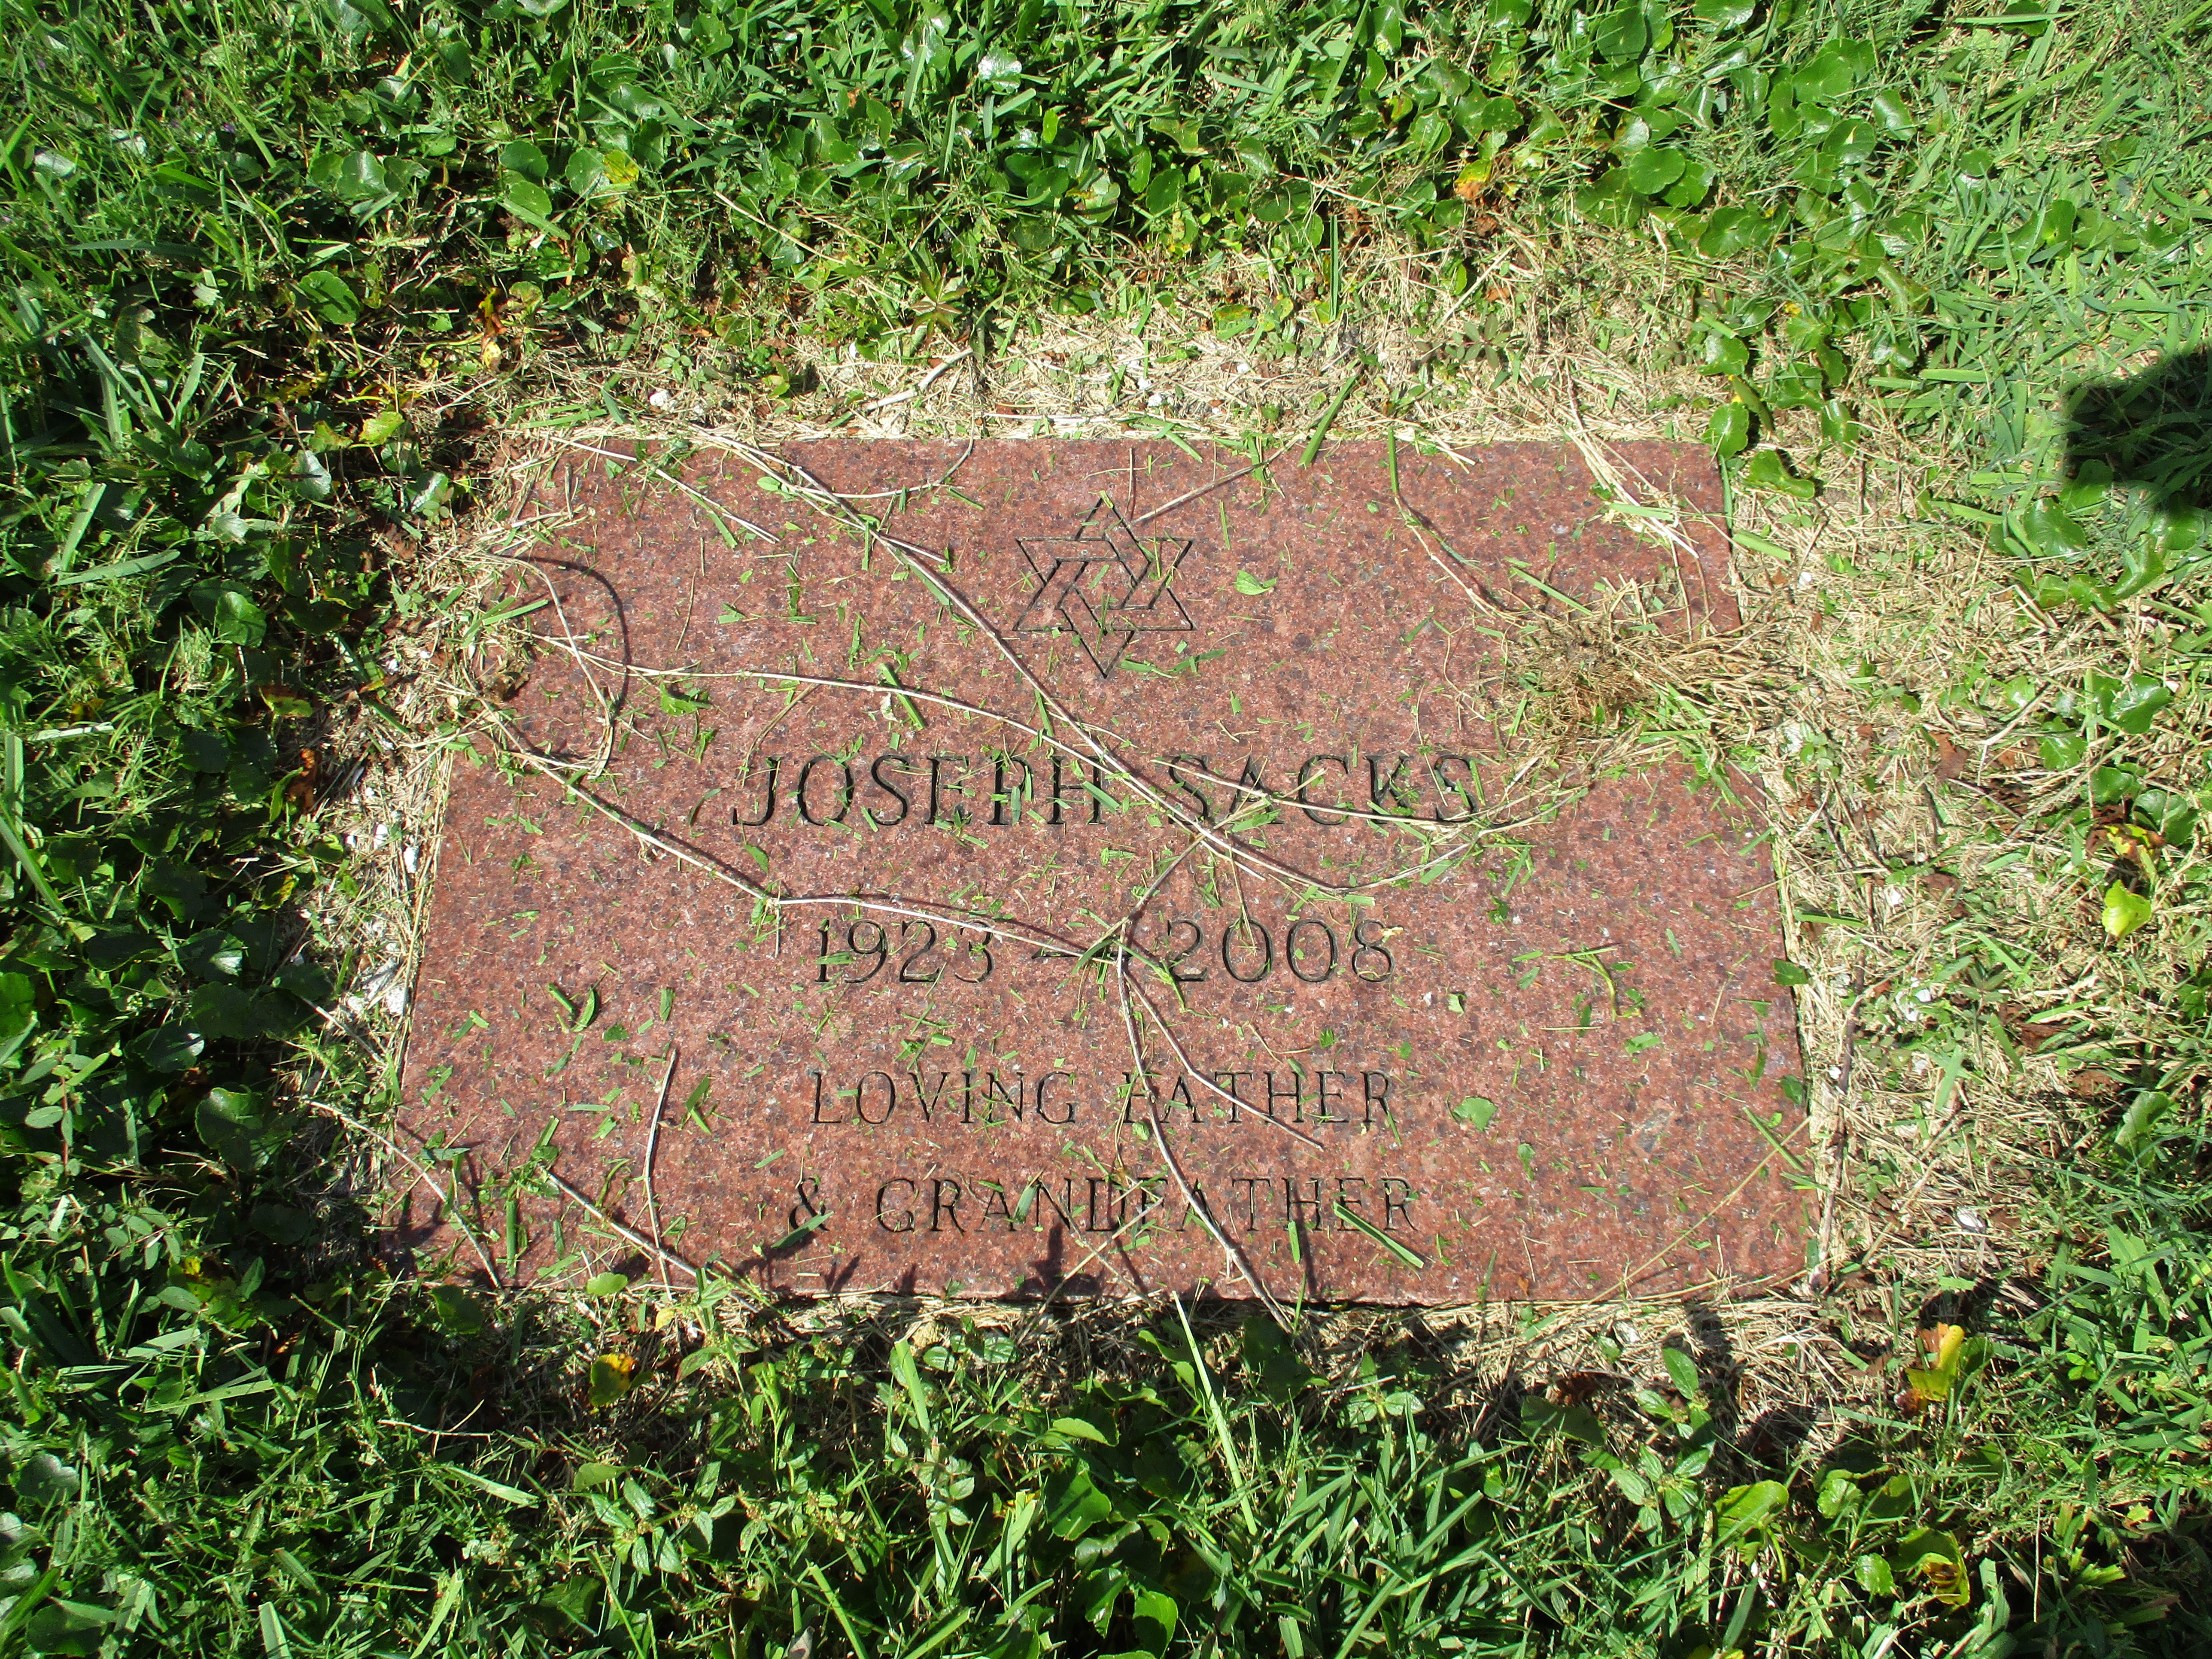 Joseph Sacks